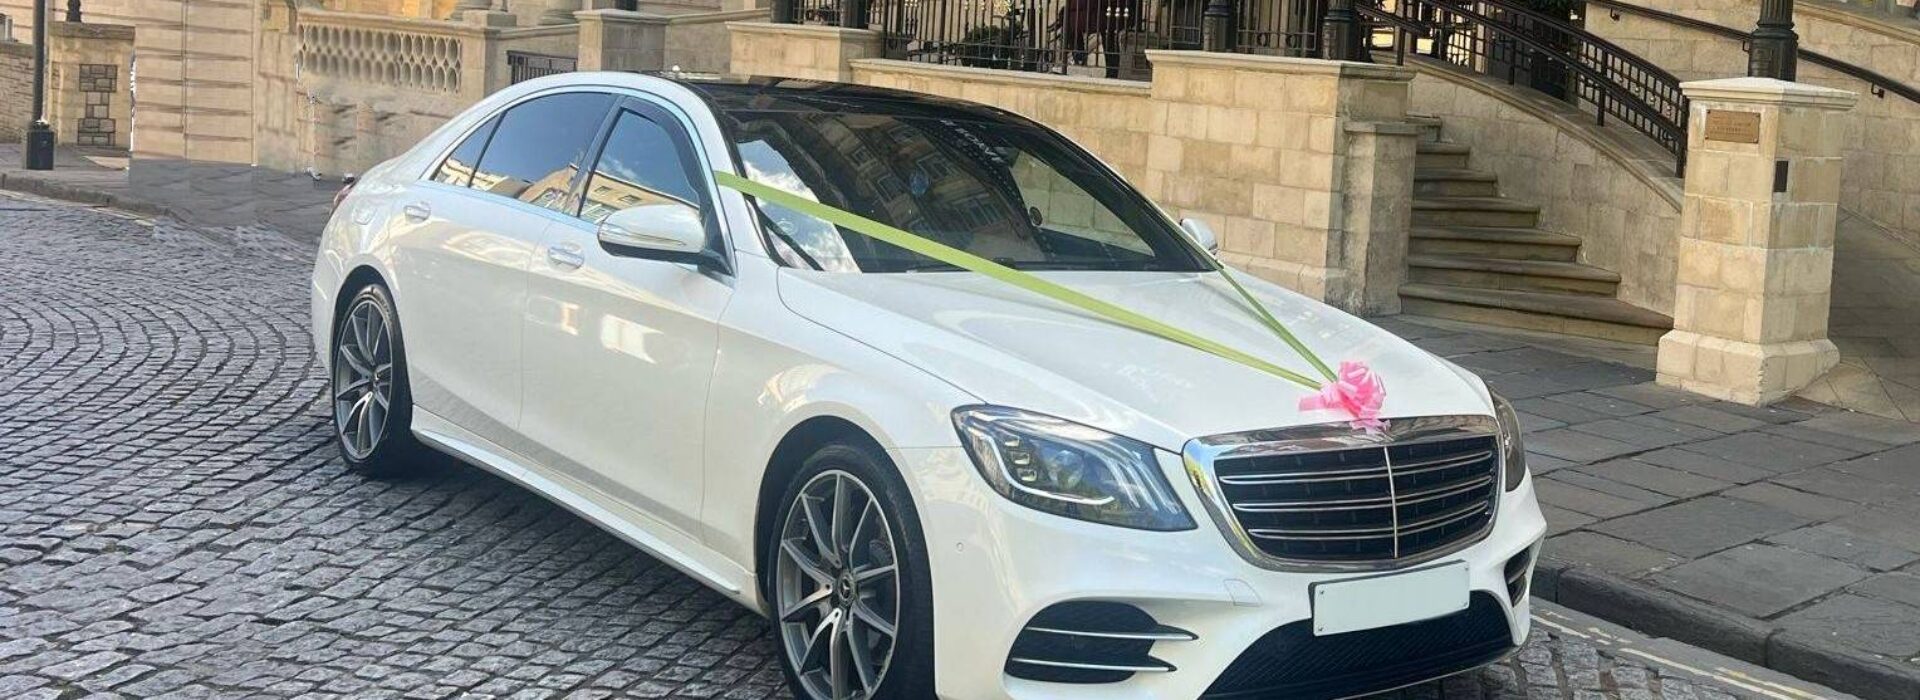 White Mercedes wedding car